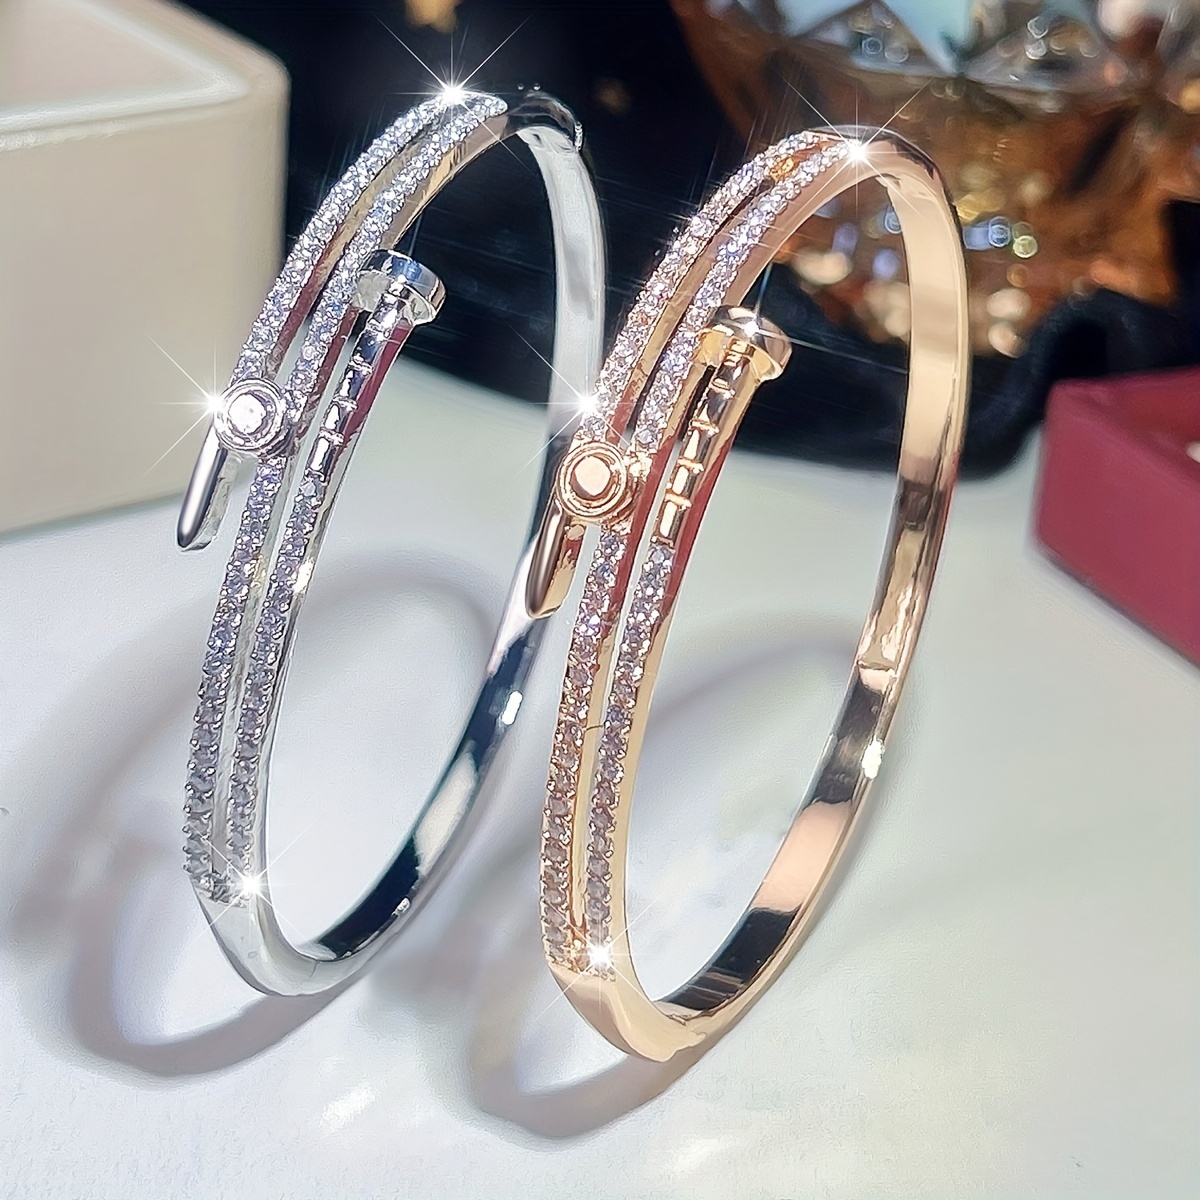 

Elegant Fashion Bangle - Japanese & Korean Style, Luxury Copper Zircon-inlaid Bracelet, Daily Wear Versatile Women's Jewelry Accessory, Gift-quality Plating, Fits All Seasons (1 Piece)